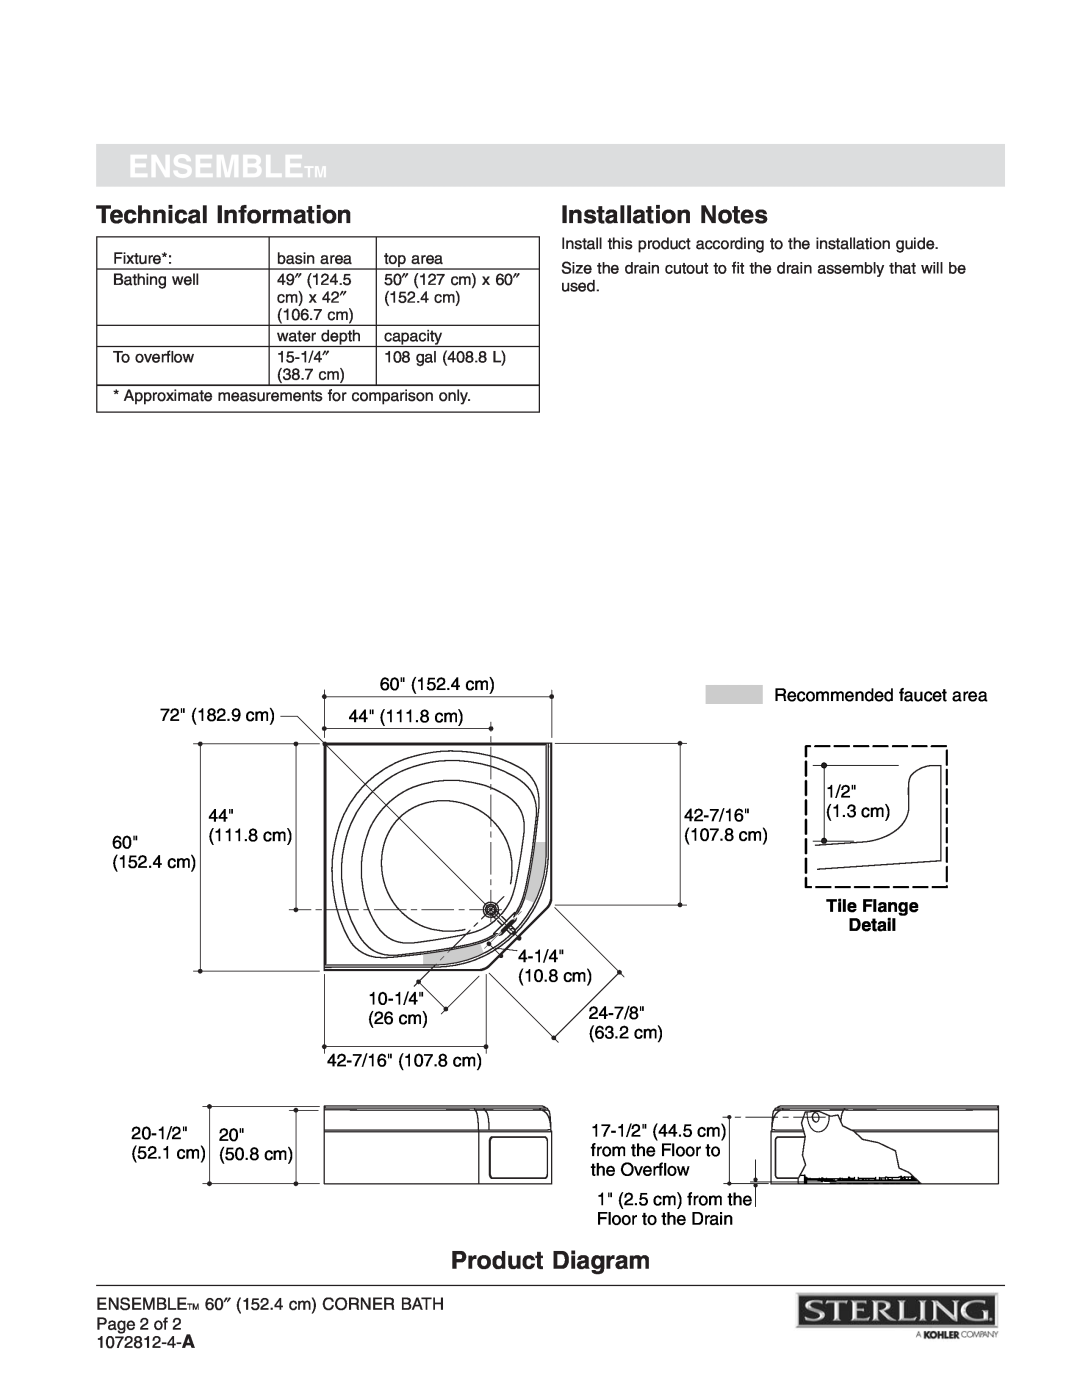 Sterling Plumbing 71131100 Technical Information, Product Diagram, Ensembletm, Installation Notes, Tile Flange Detail 